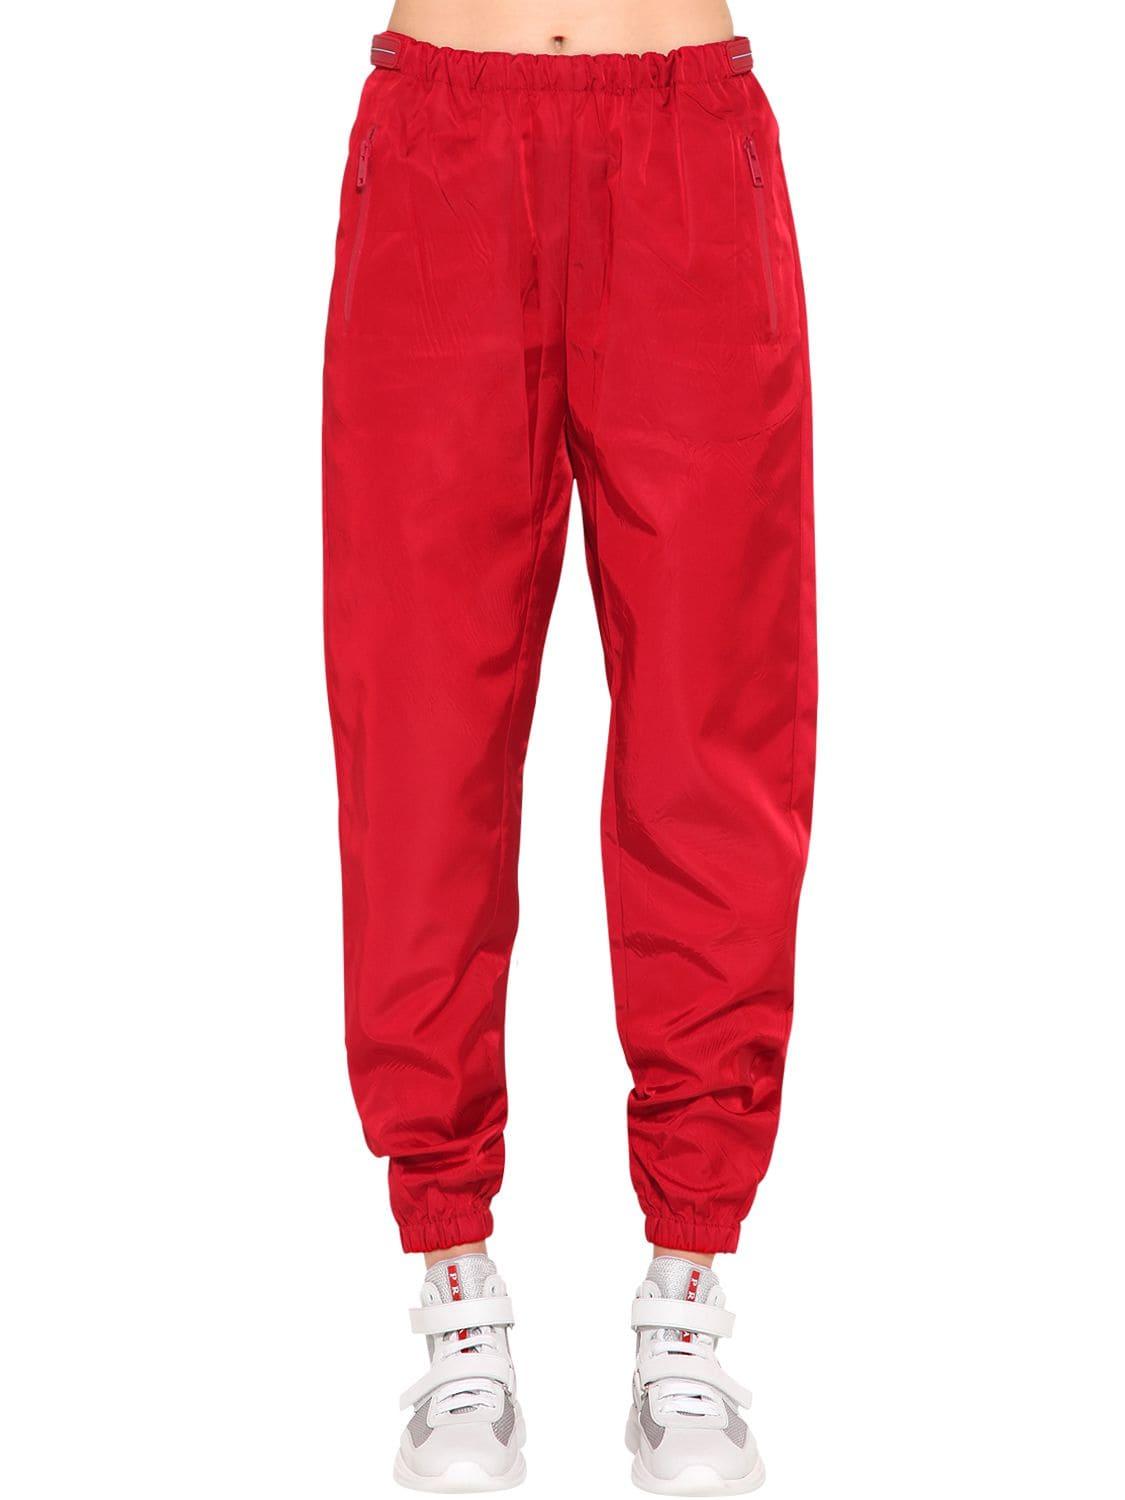 Prada Synthetic Nylon Gabardine Track Pants in Red - Lyst